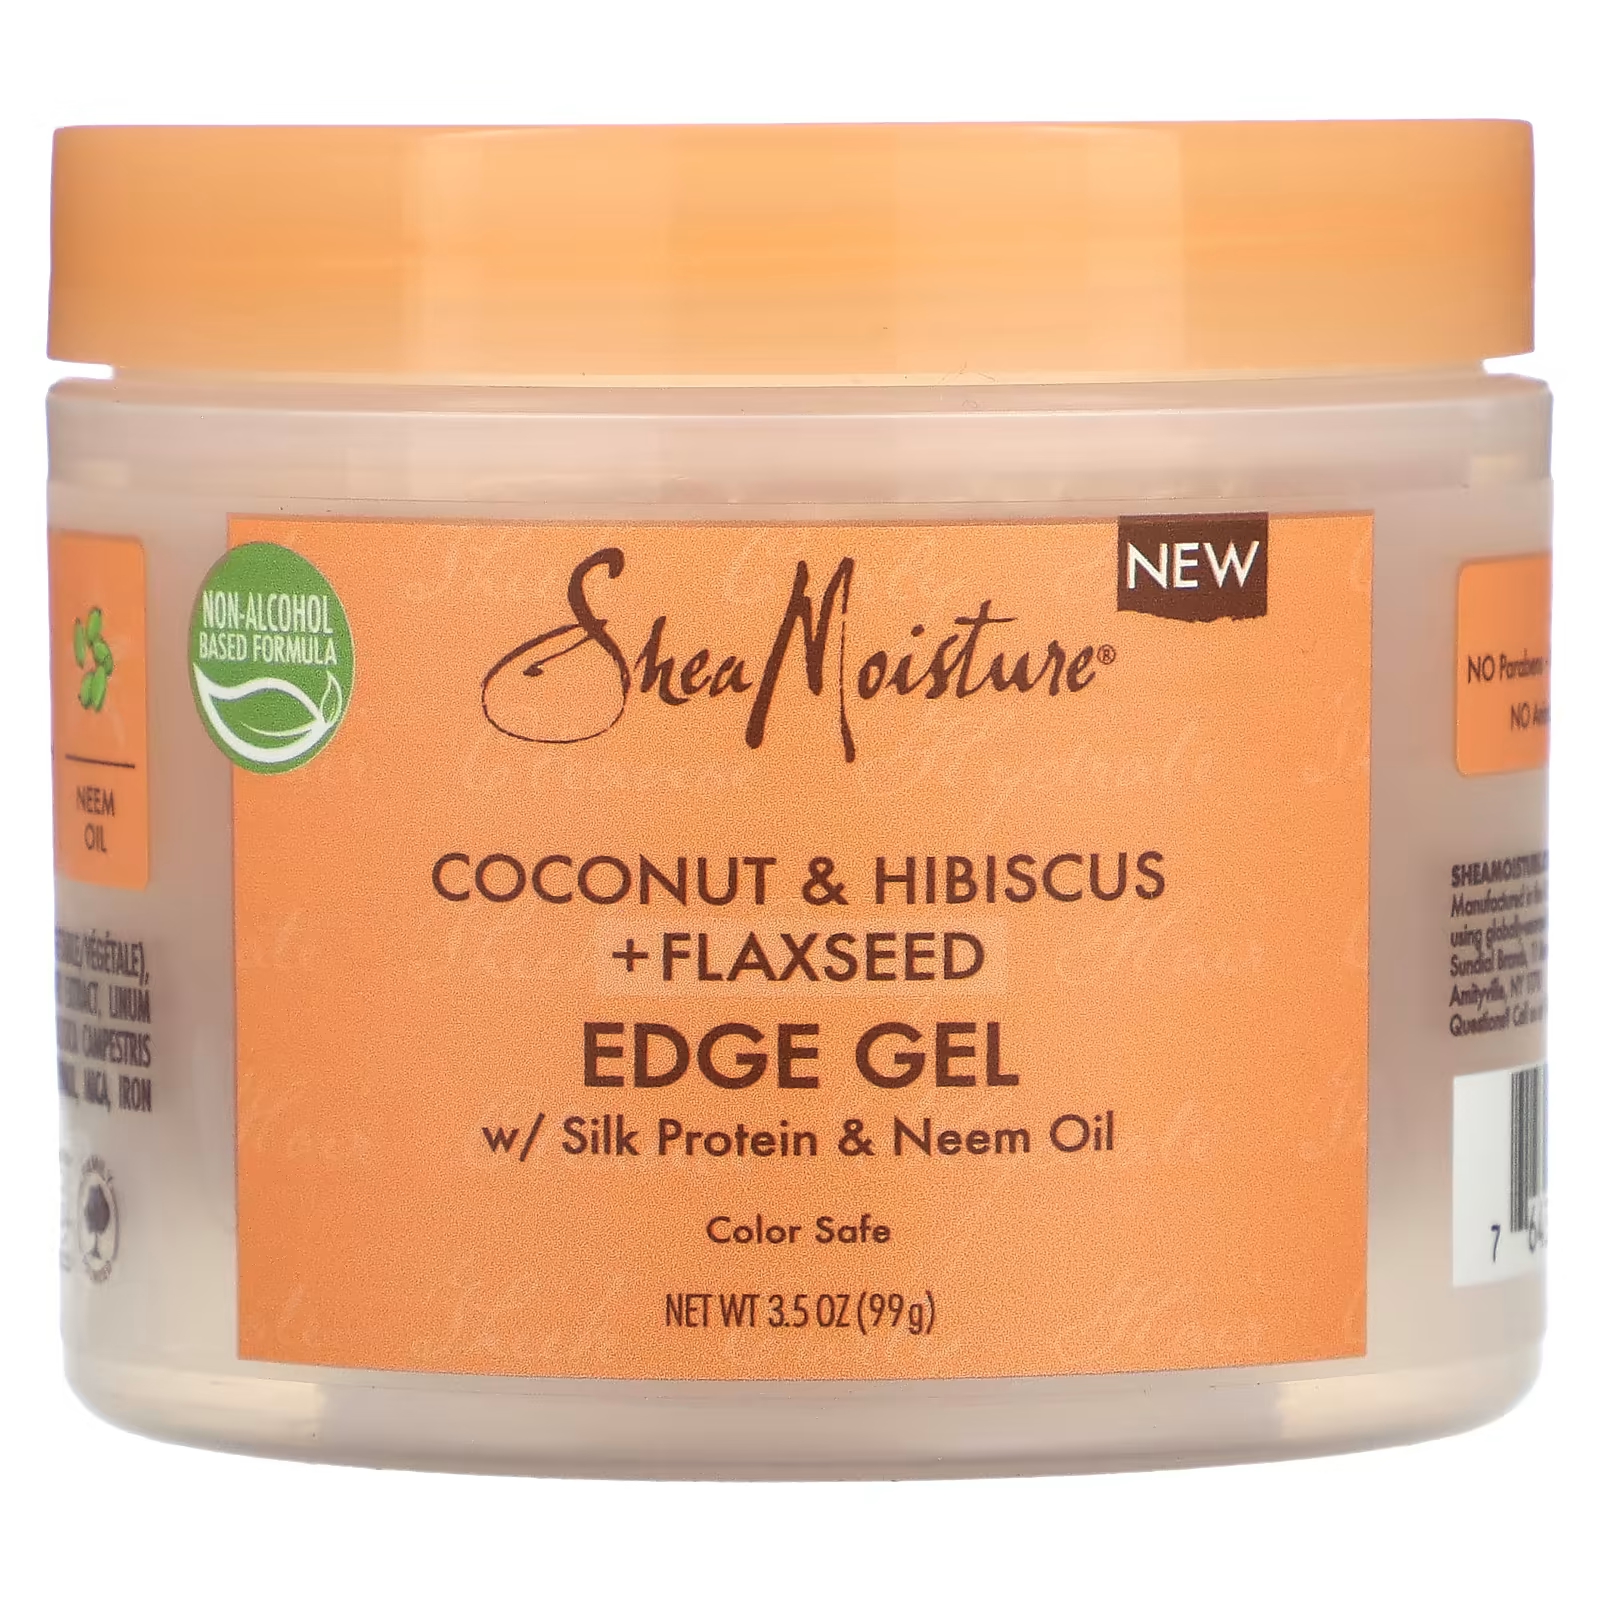 sheamoisture strengthen Гель для волос SheaMoisture Edge Gel кокос гибискус и льняное семя, 99г